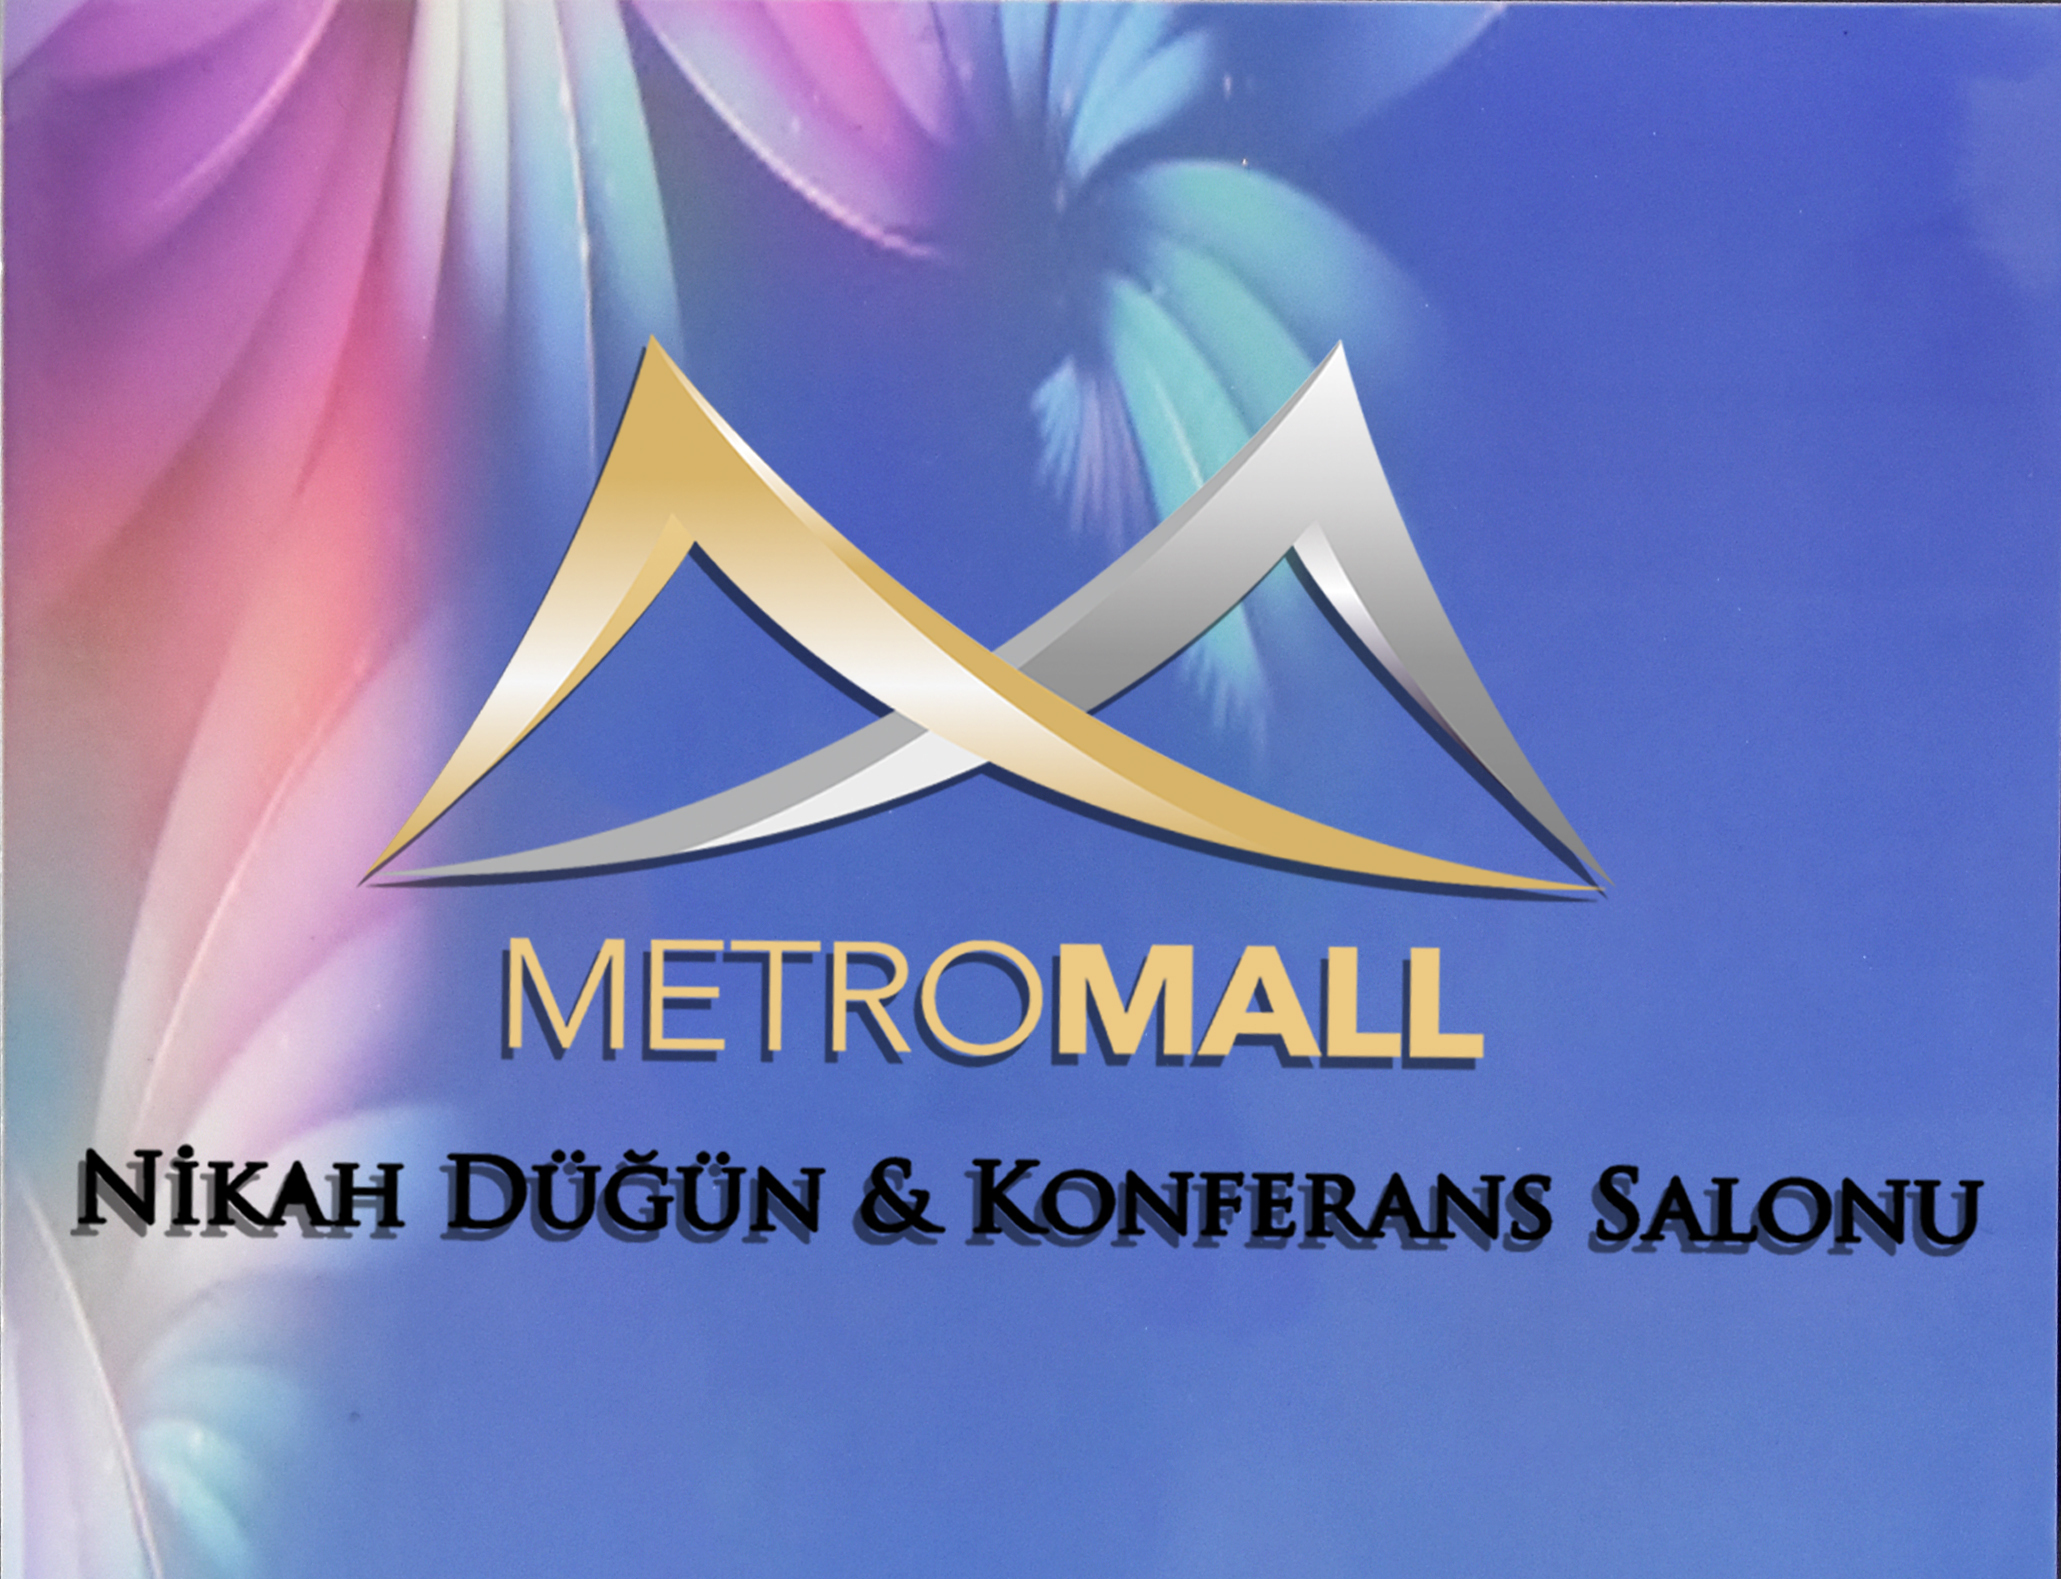 Metromall Balo & Nikah Frenze Salonu